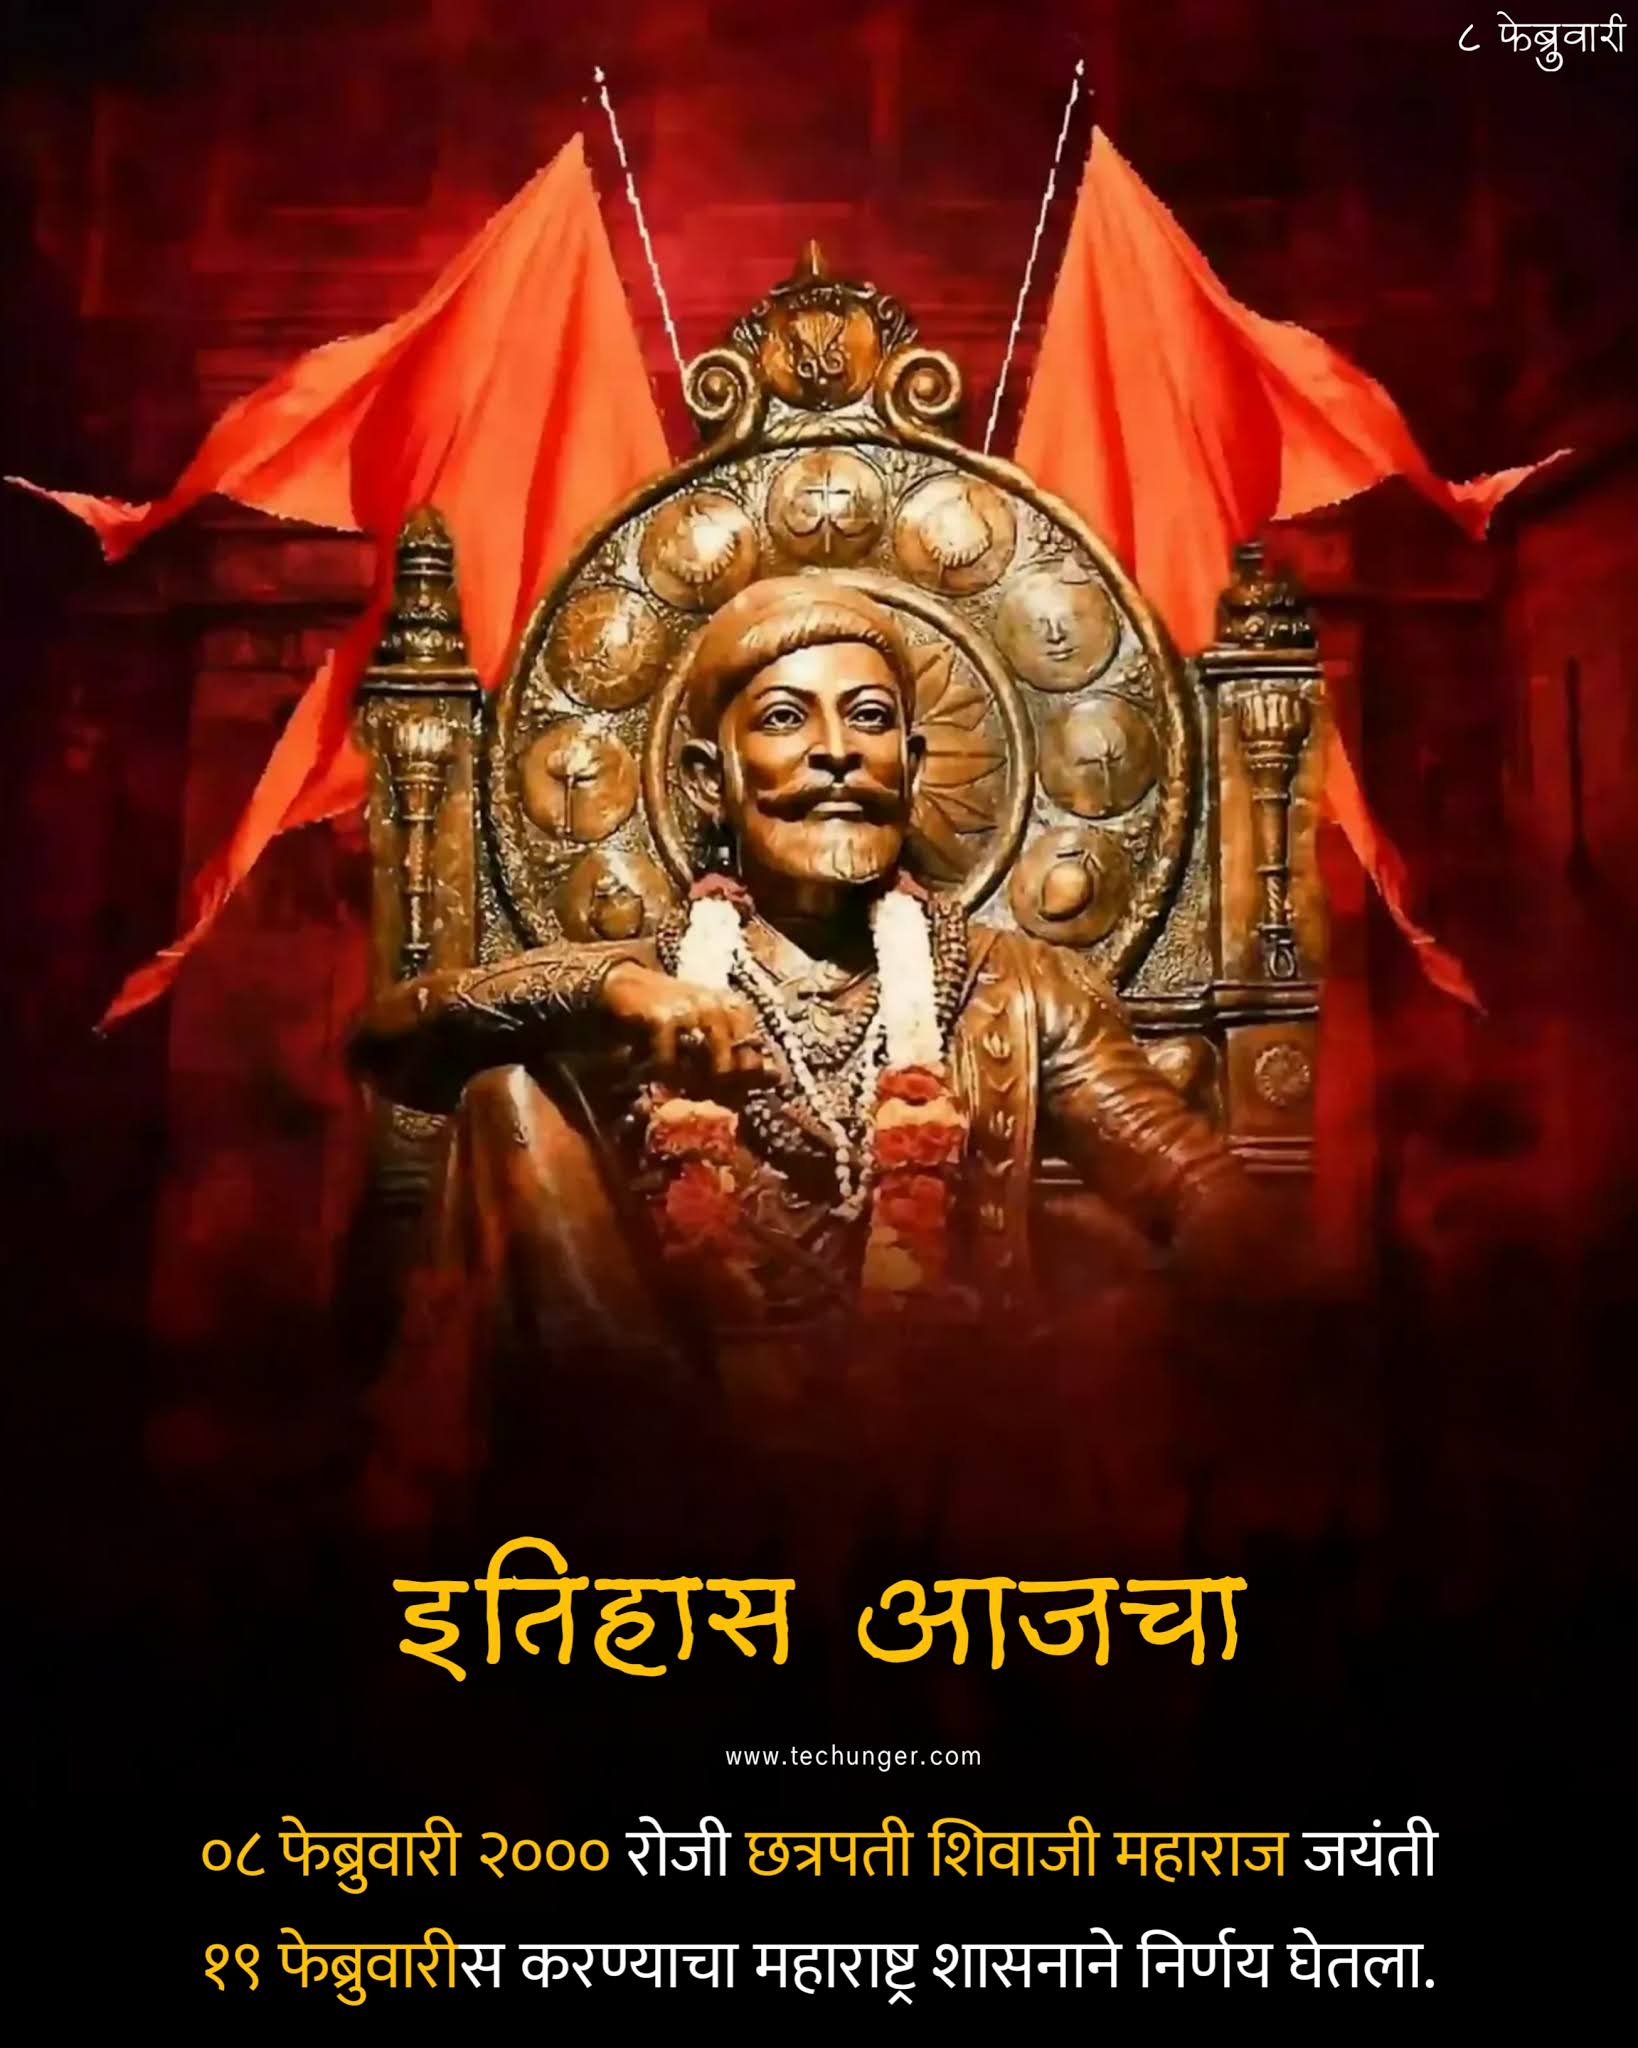 शिवजयंती साजरा, onthisday Maharashtra government declared to celebrate shivajayanti, 19 Feb, 19 February, 19 February 2021, shivajayanti, shiwaji Maharaj, Shivaji Maharaj, saurabh chaudhari, techunger, 8 feb